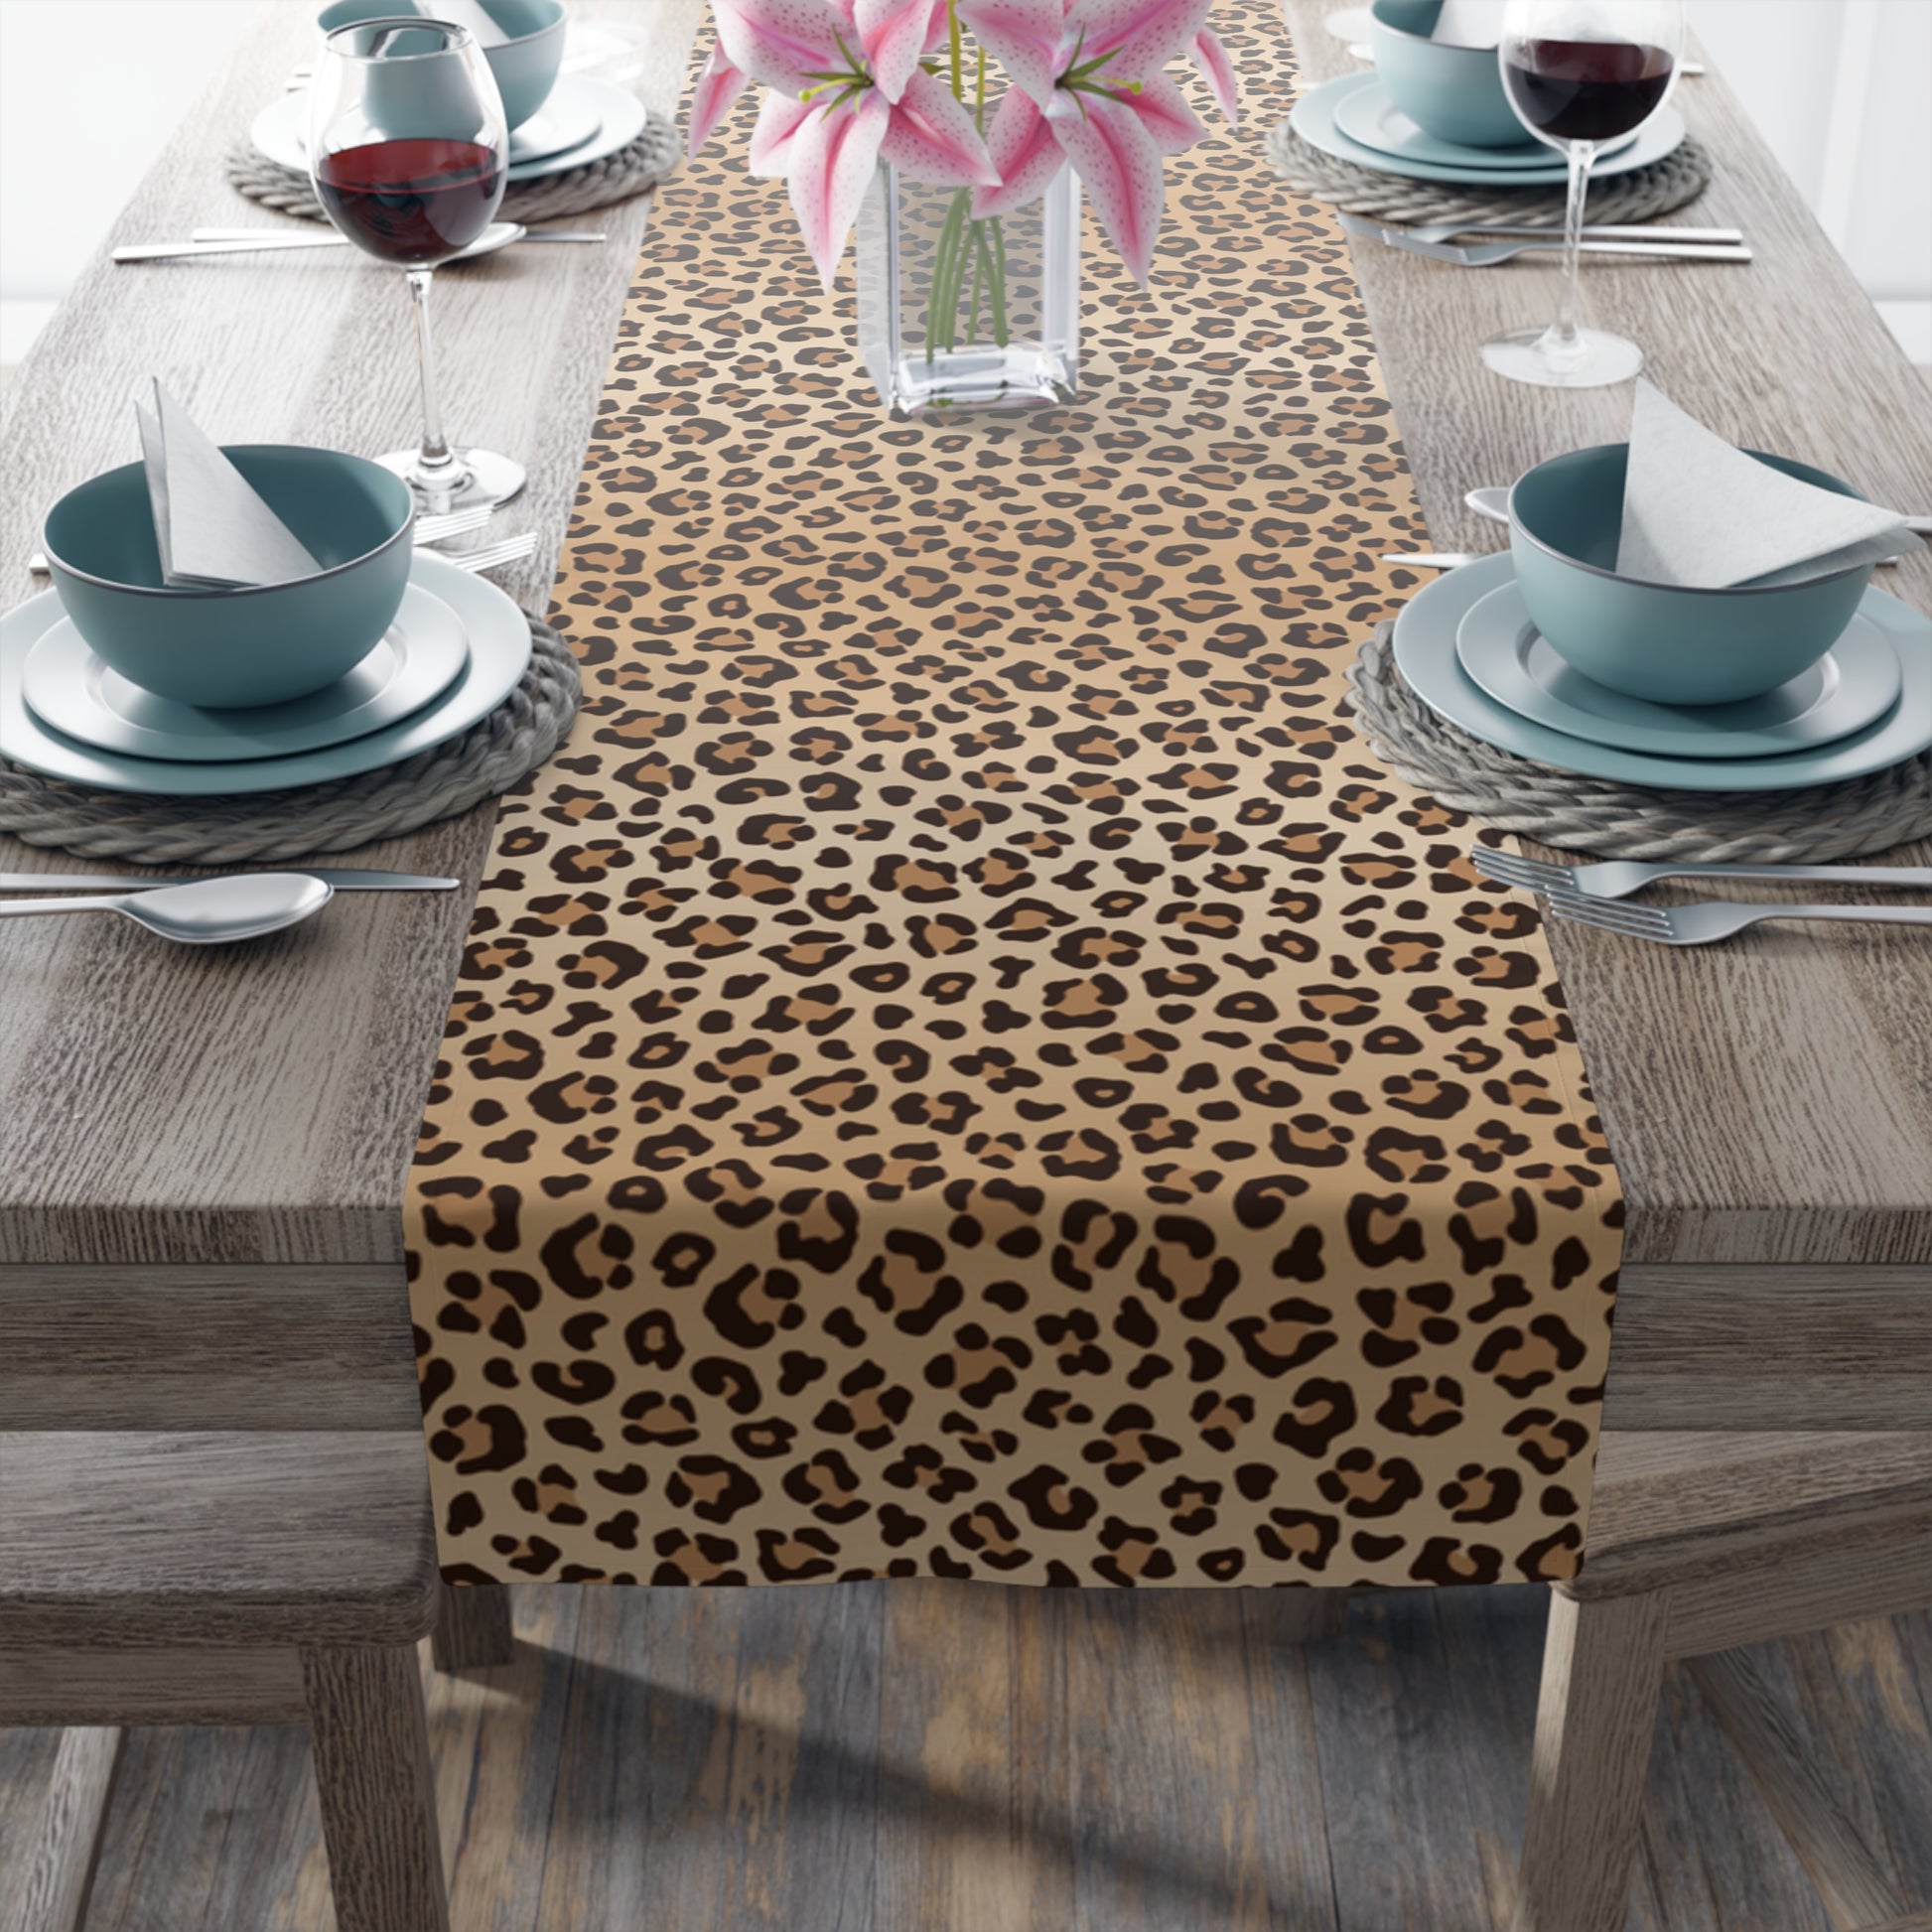 Leopard Print Table Runner / Leopard Print Decor – Farmhouse for the Soul